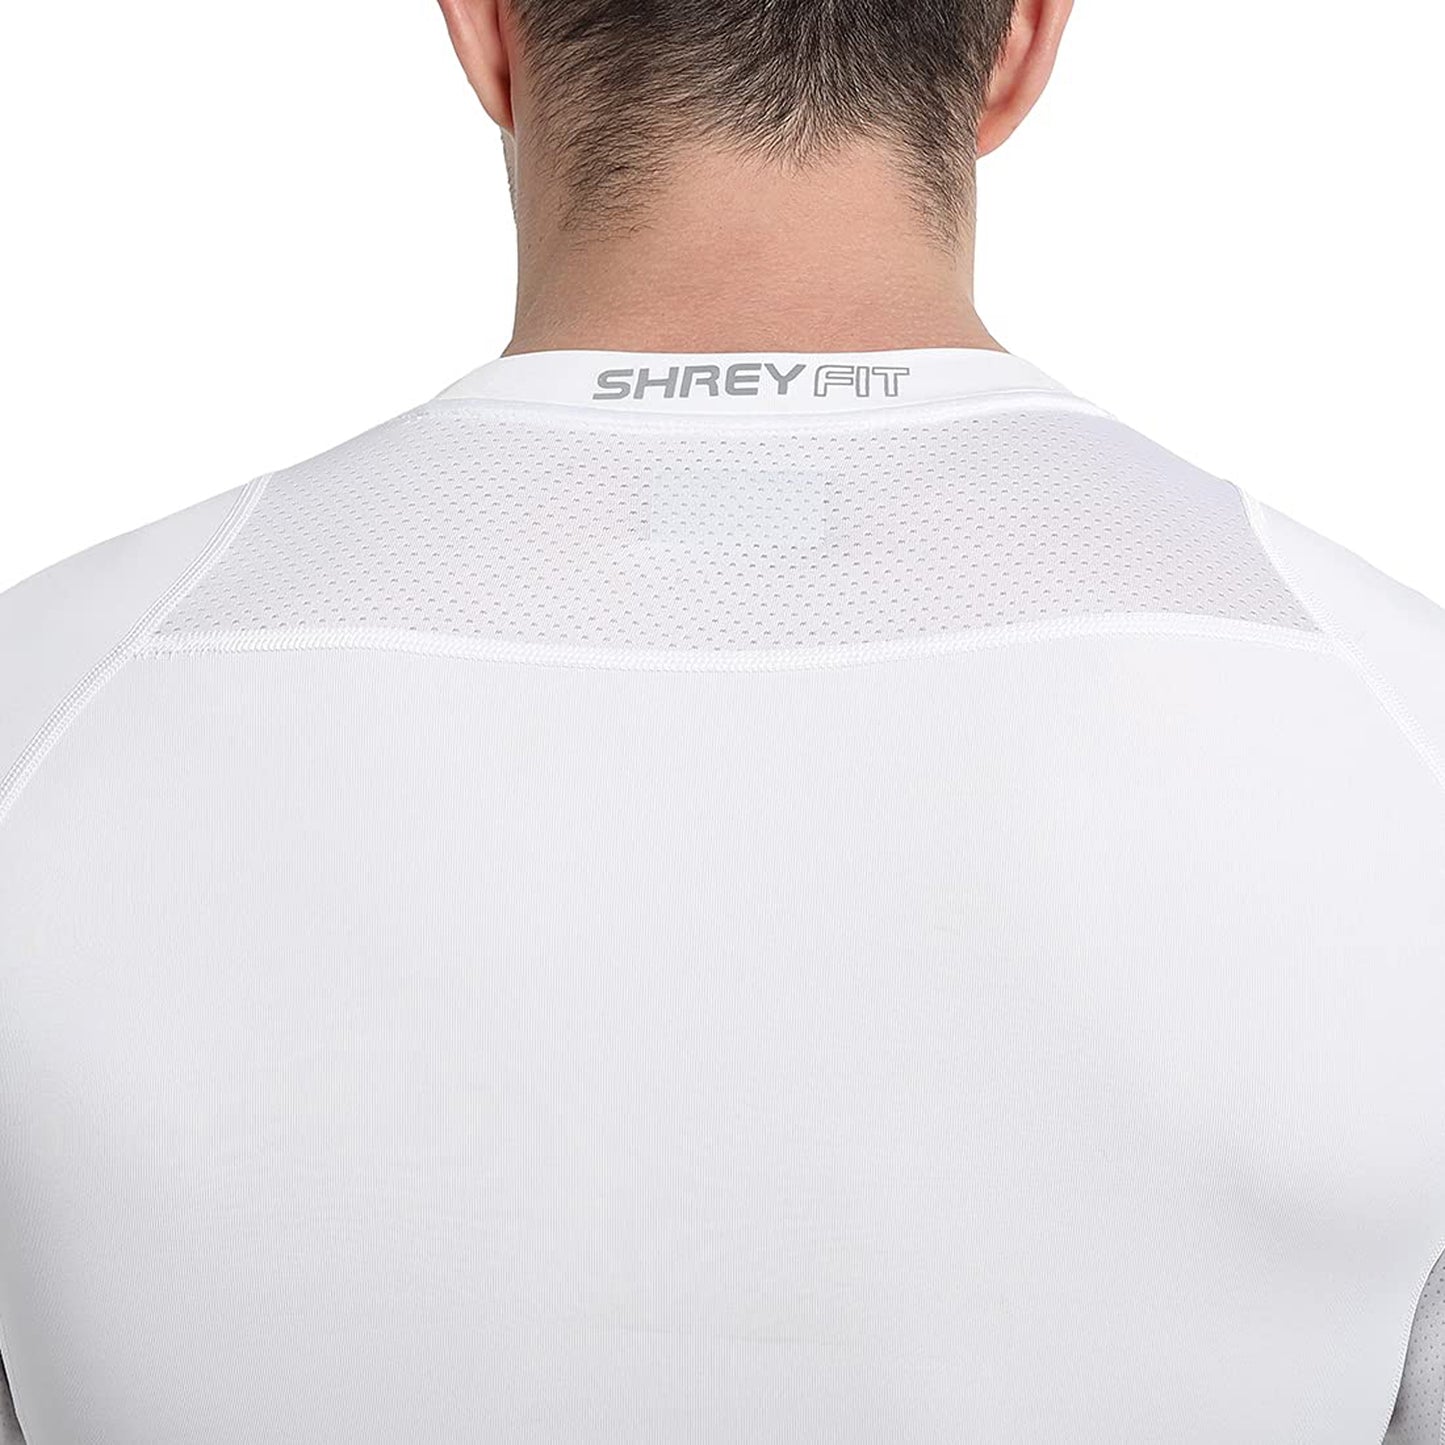 Shrey 1756 Intense Compressions Long Sleeve Top ,White - Best Price online Prokicksports.com